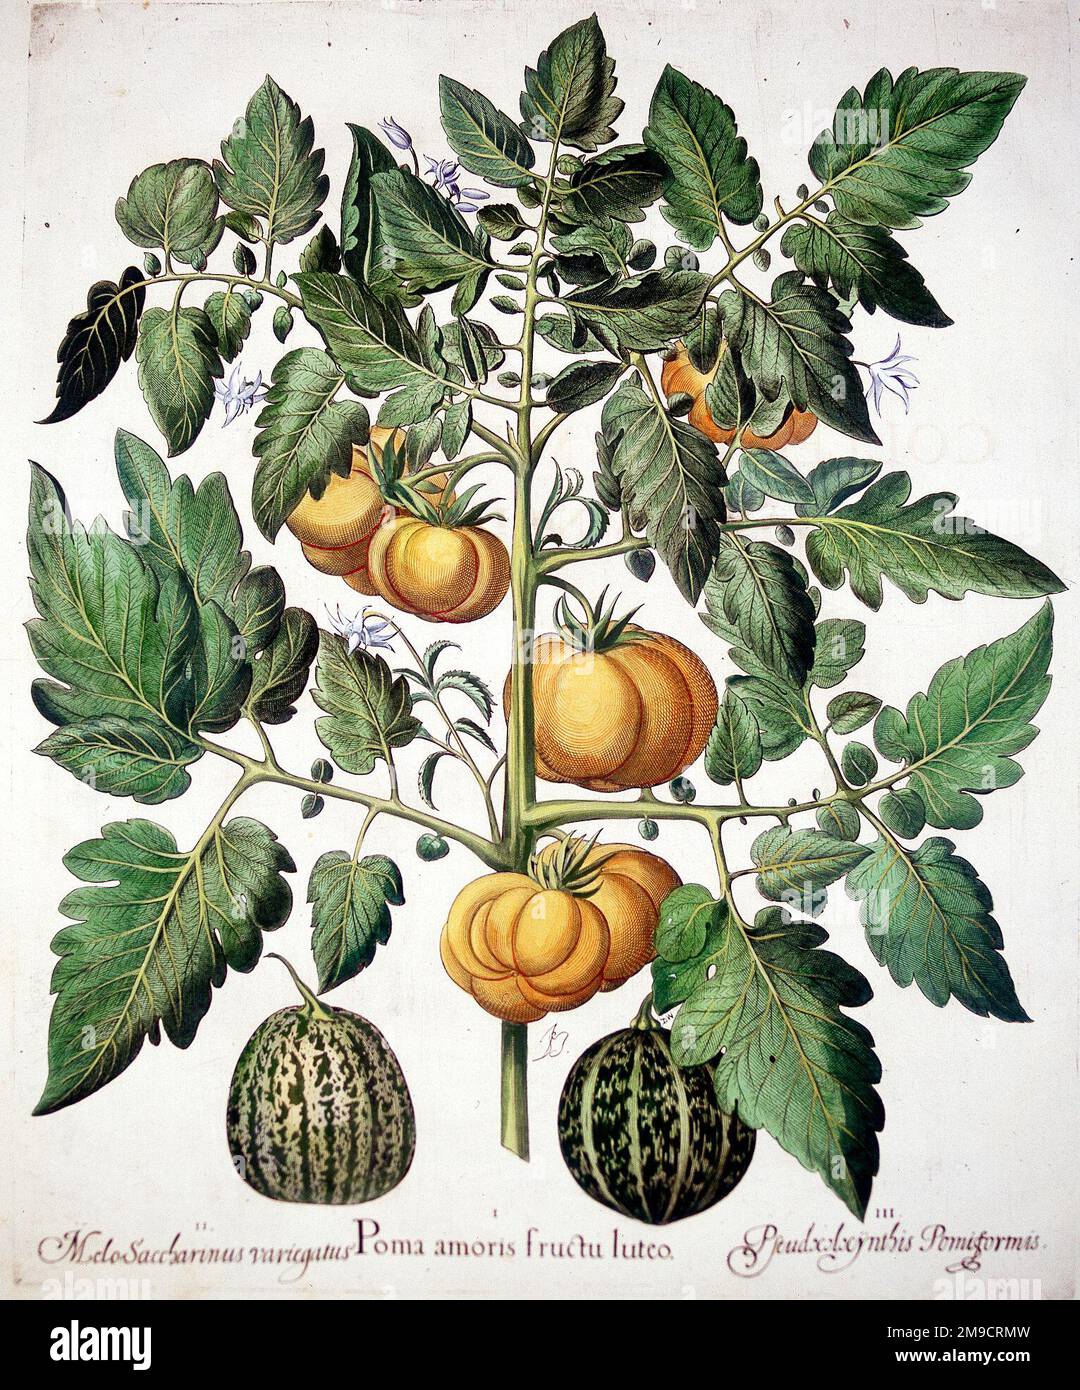 Hortus Eystettensis - Poma Amoris Fructu Luteo - Tomatoes and Melons Stock Photo